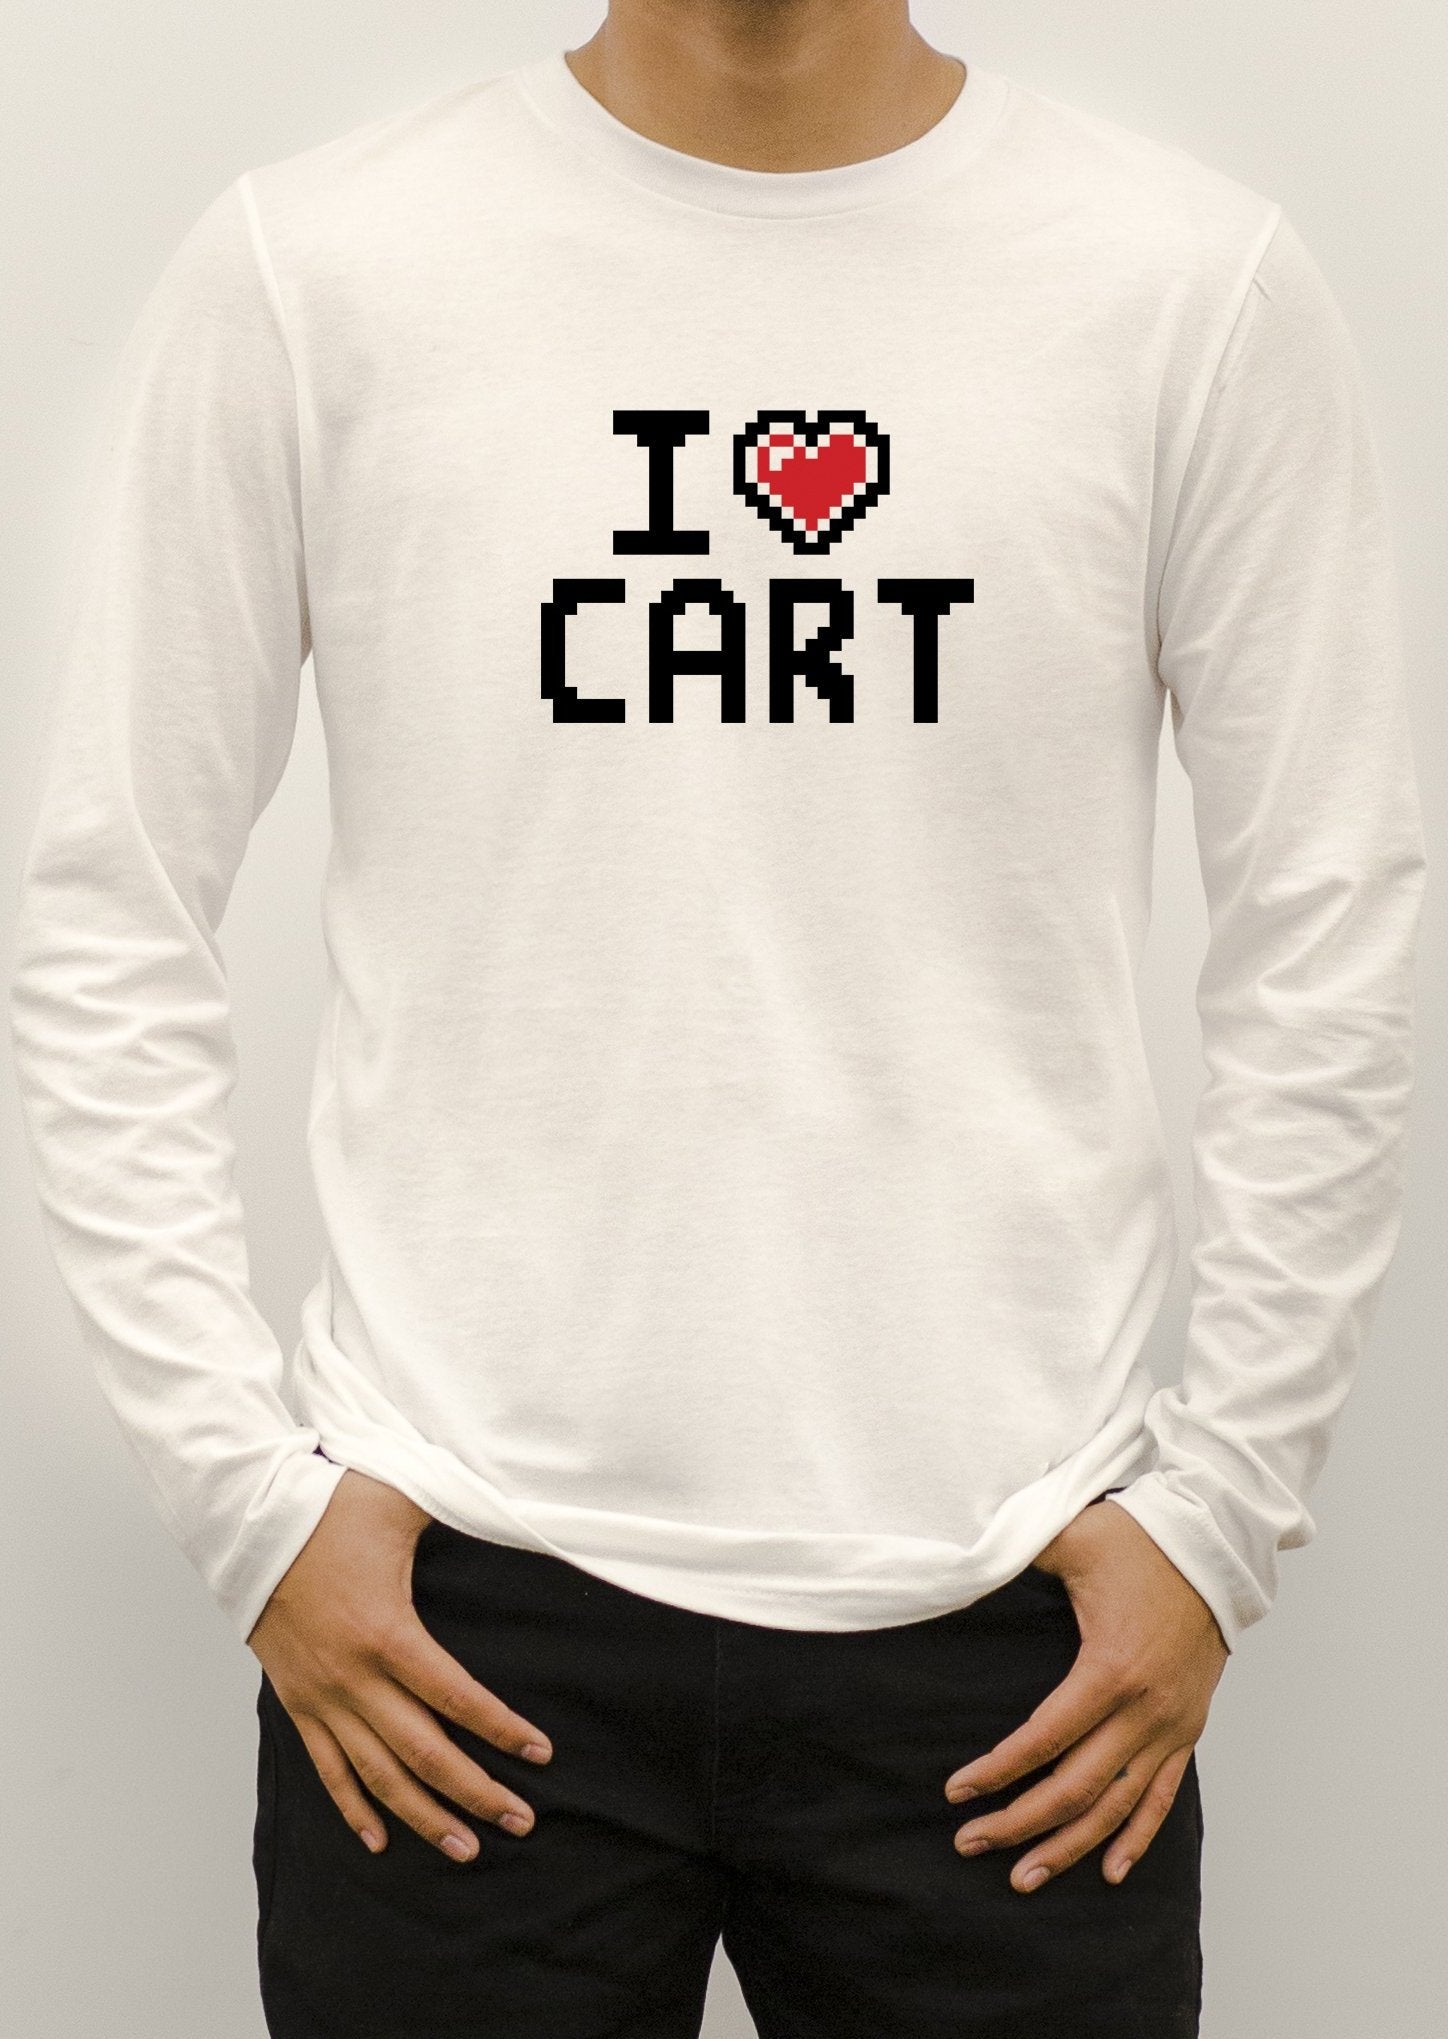 Pixel - I Love CART - Long Sleeve T-Shirt / Unisex Fit